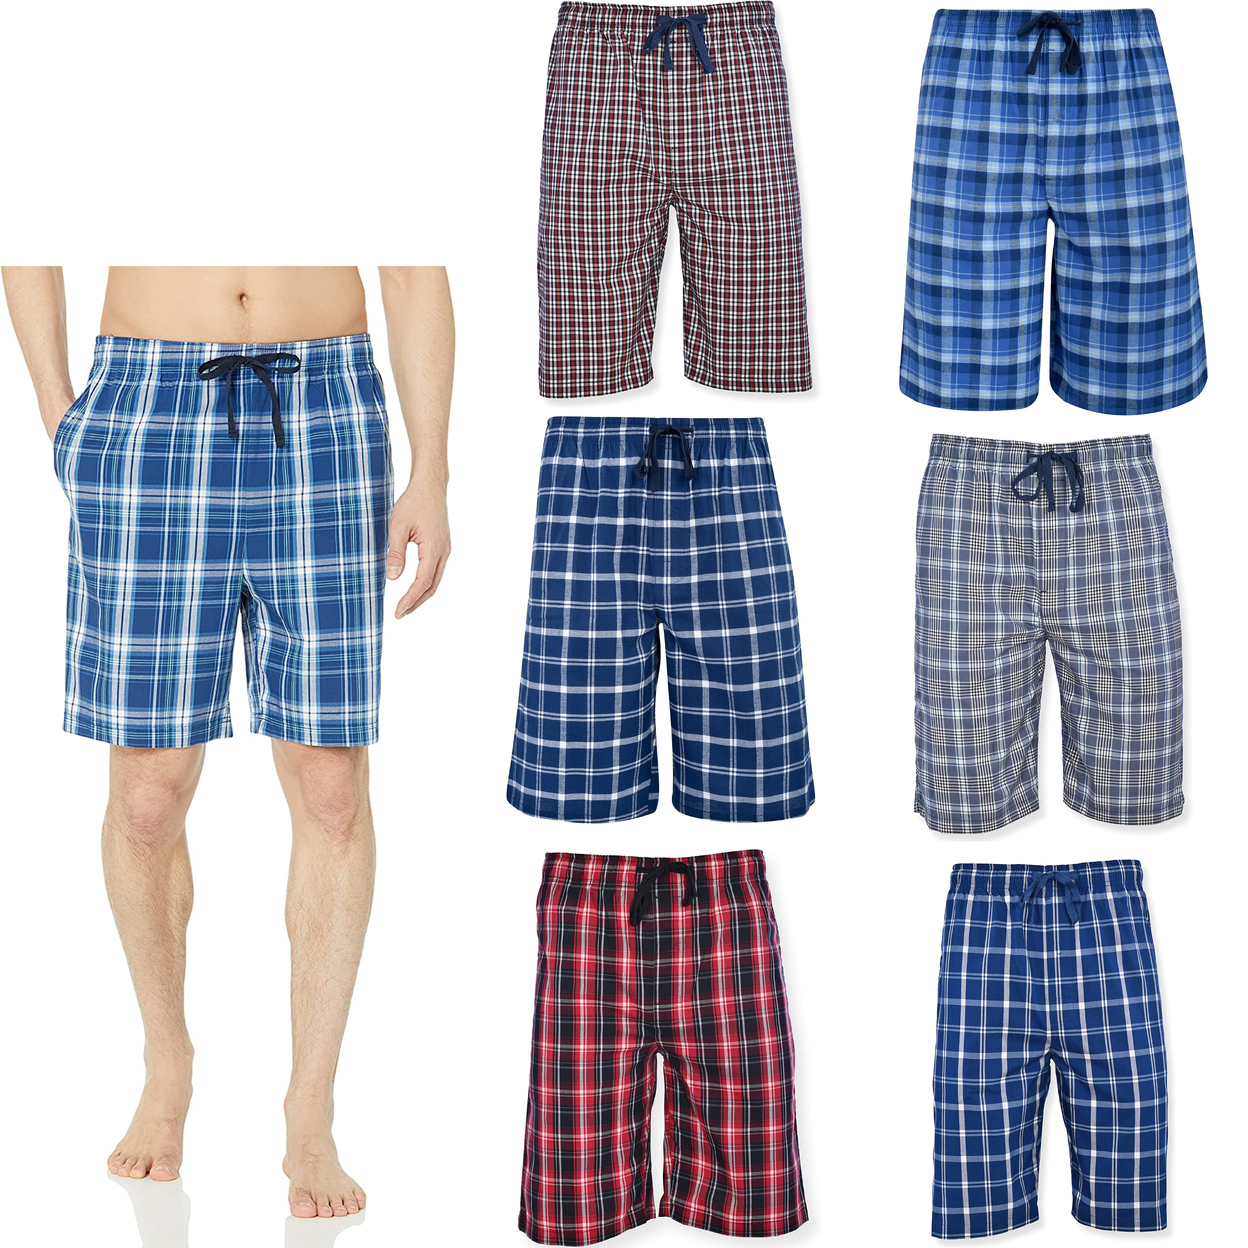 2-Pack: Men's Ultra Soft Plaid Lounge Pajama Sleep Wear Shorts - Red & Tan, Large